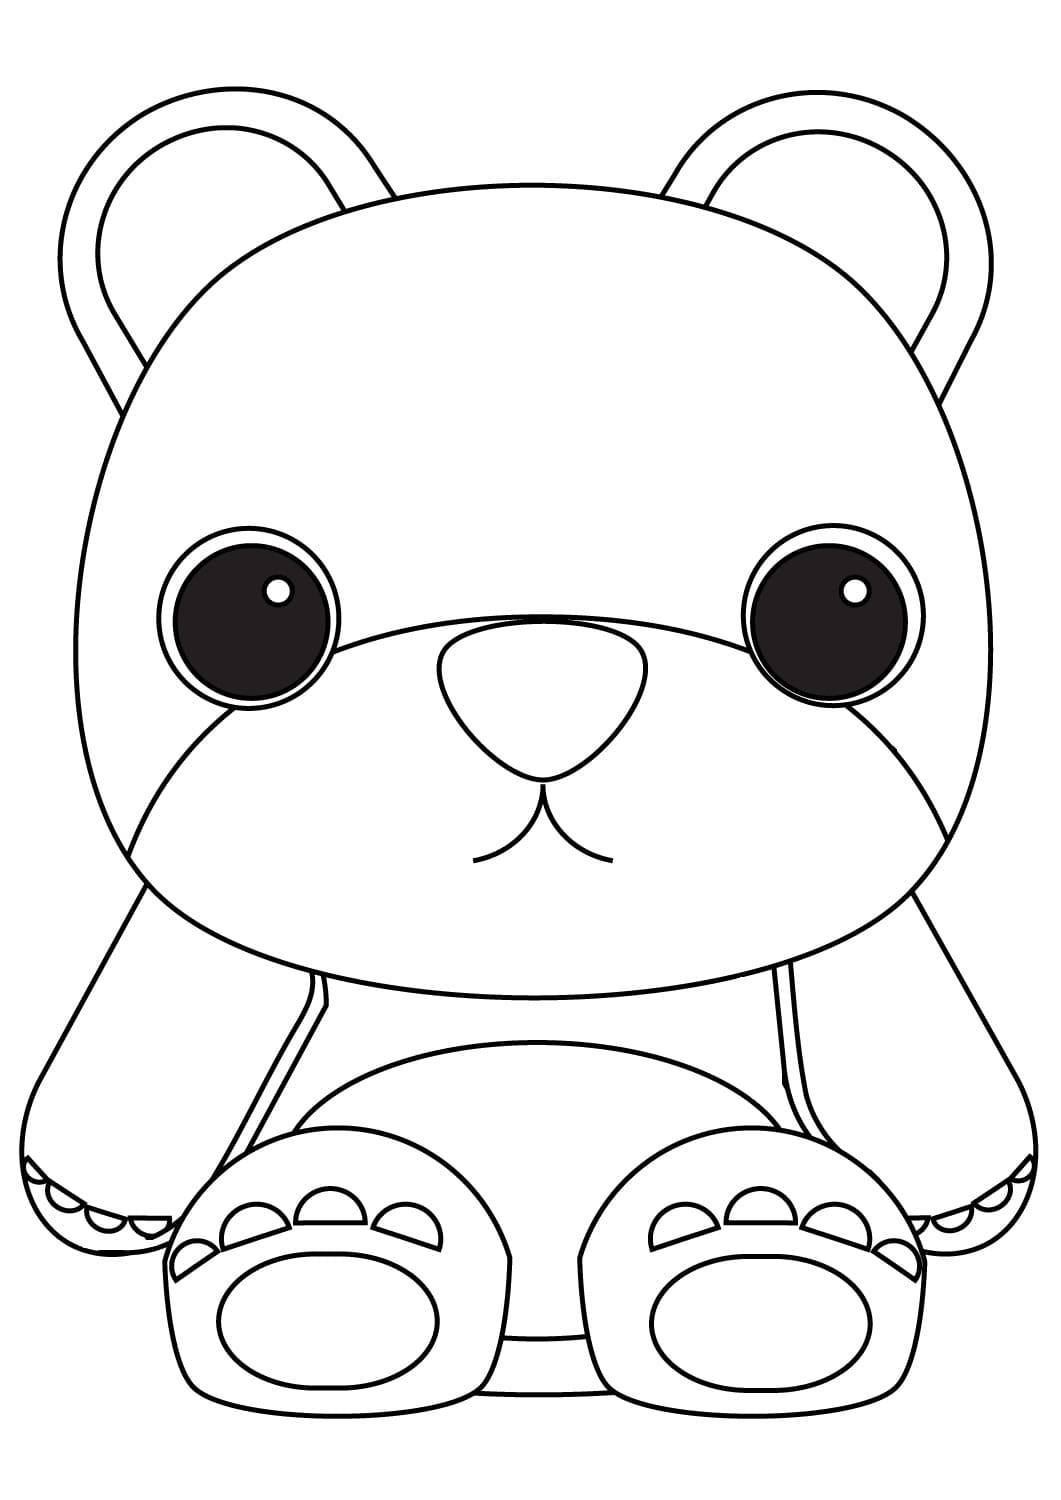 Coloring page Kawaii teddy bear Print Free